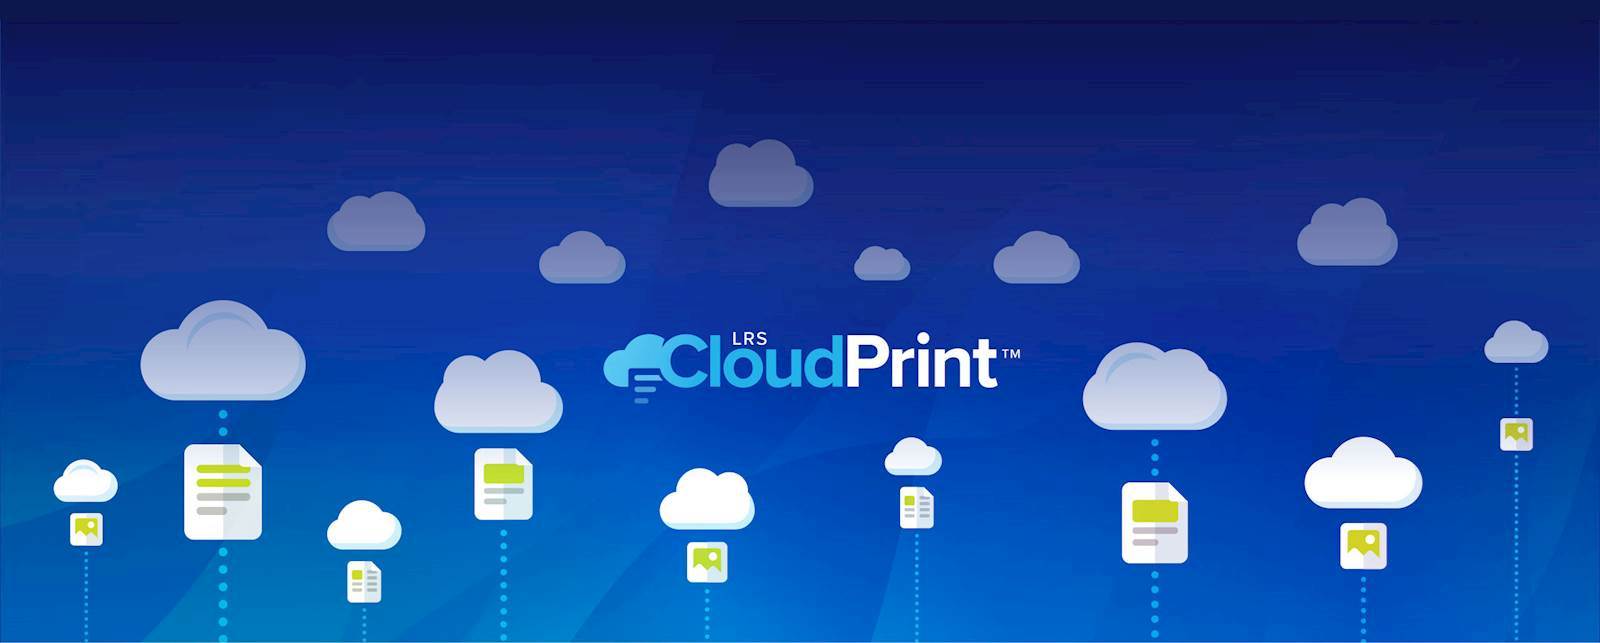 Cloud print graphic